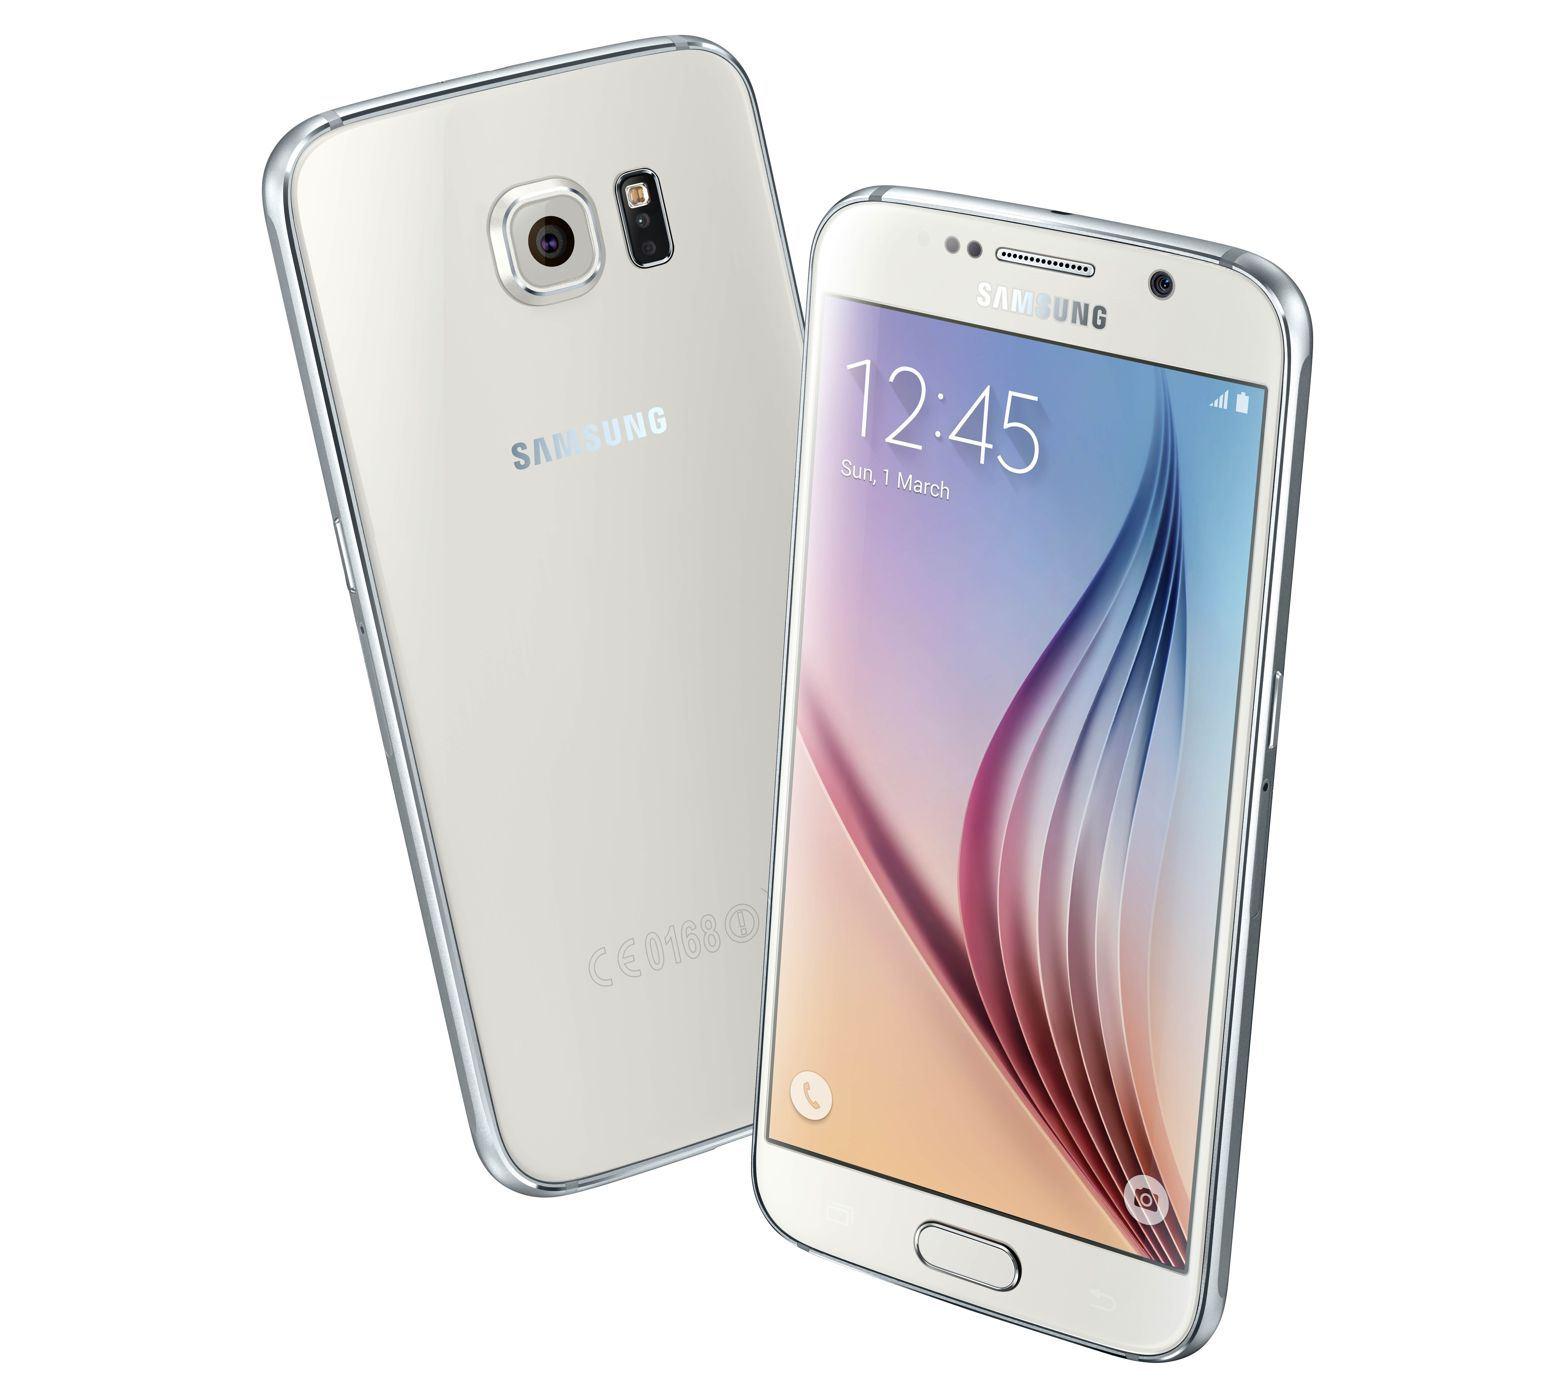 to bound Leeds optional Samsung Galaxy S6 Duos(Dual-Sim) 32GB white pearl | Vkauppa.fi